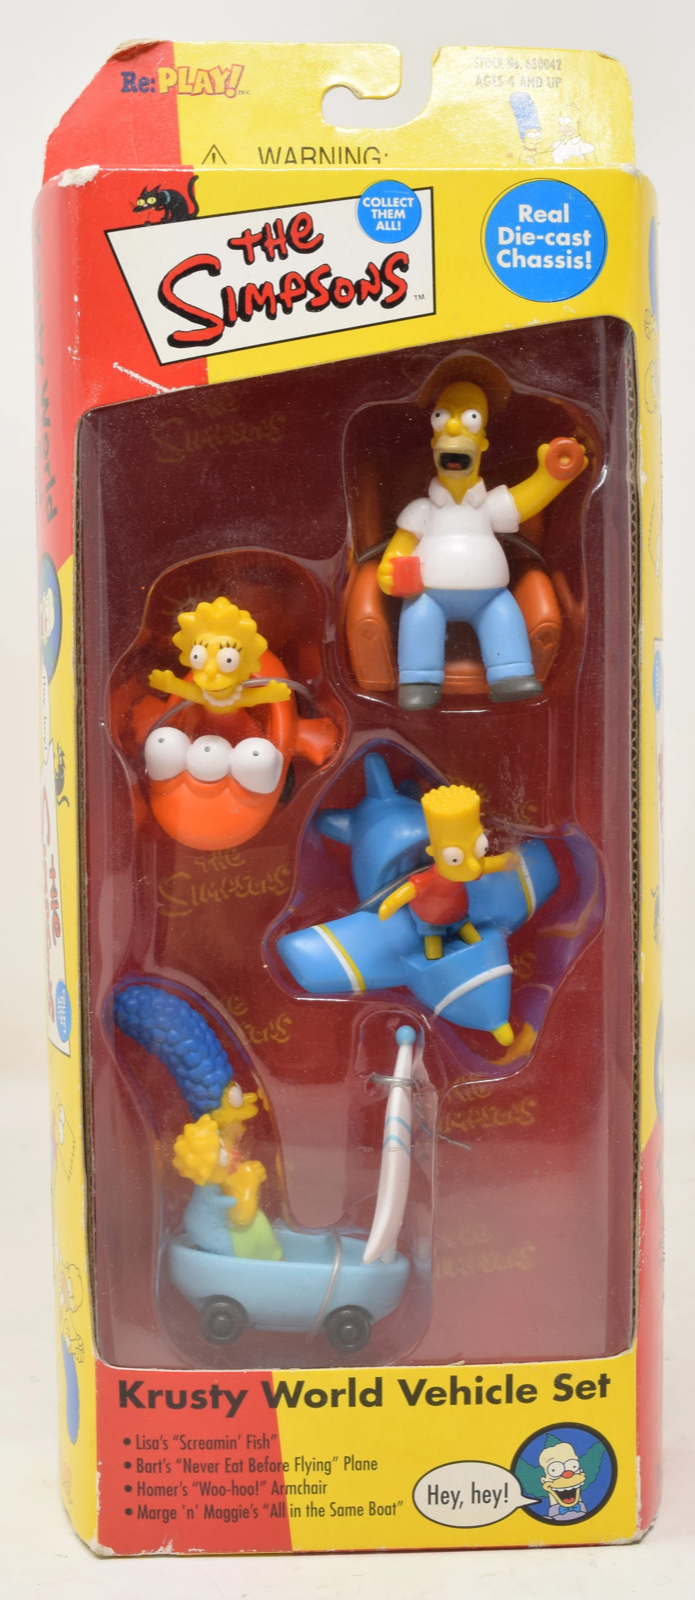 SIMPSONS, Krusty World Vehicle Set Playmates Toys 2000 Action Figure Gift Cars - $12.19